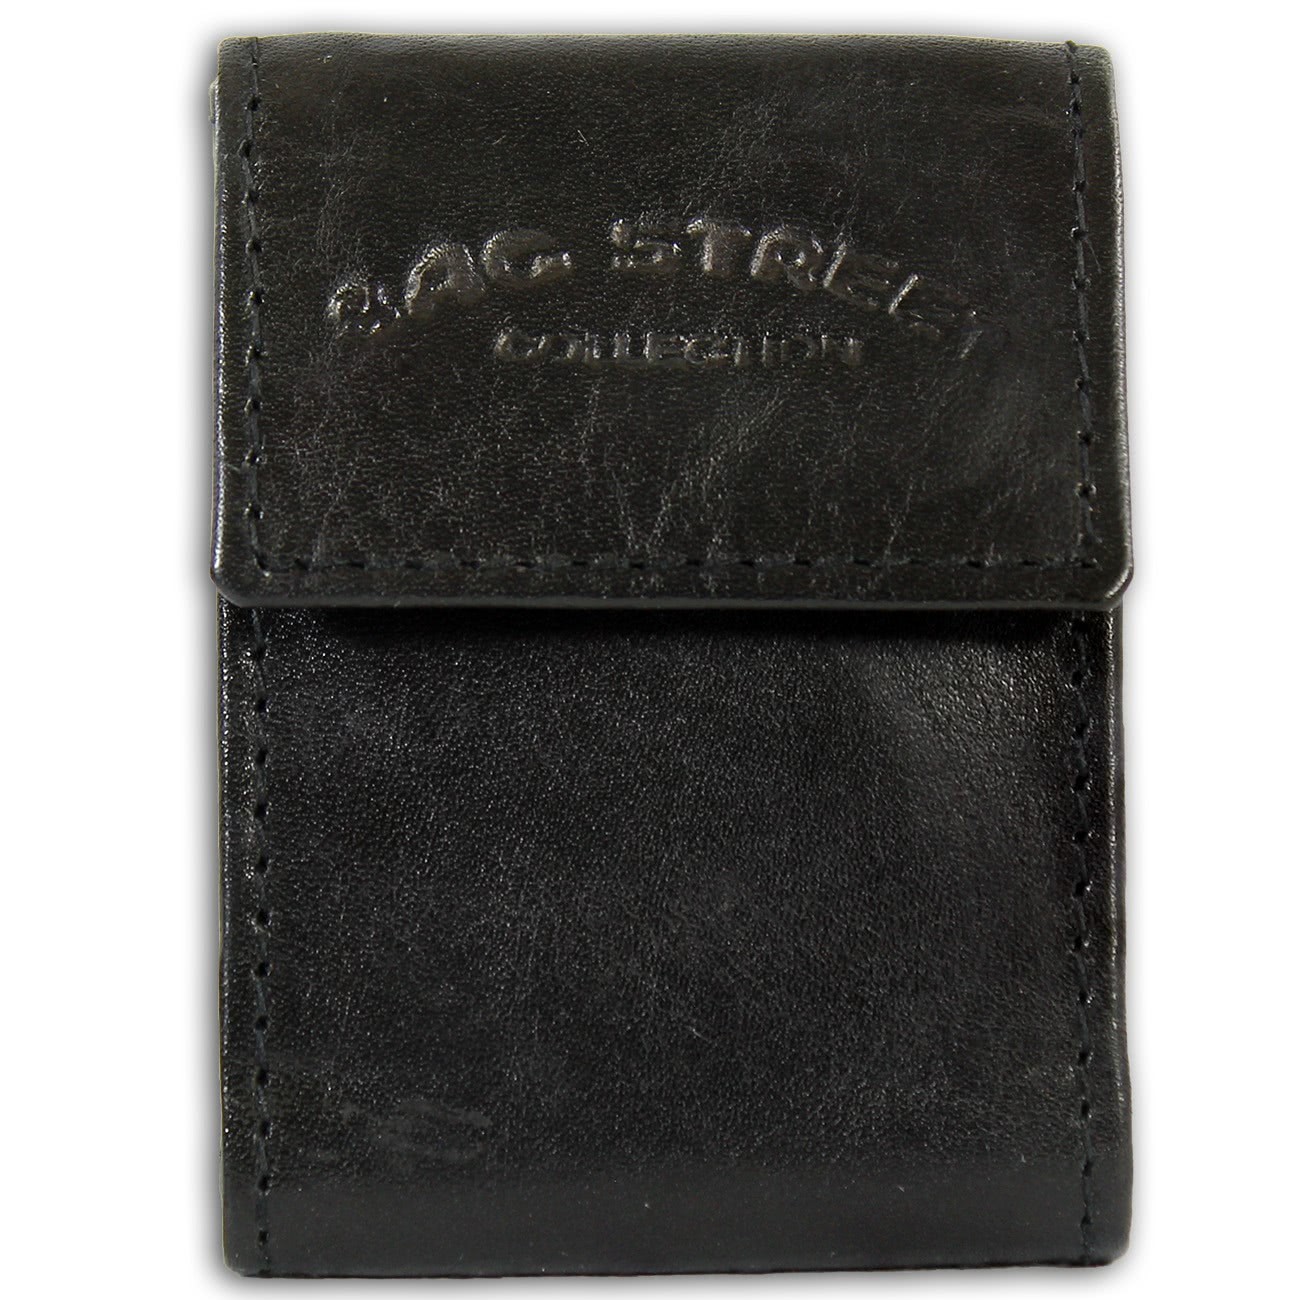 Bag Street kompakte Minibörse Echtleder Geldbörse Portemonnaie schwarz OPJ801S